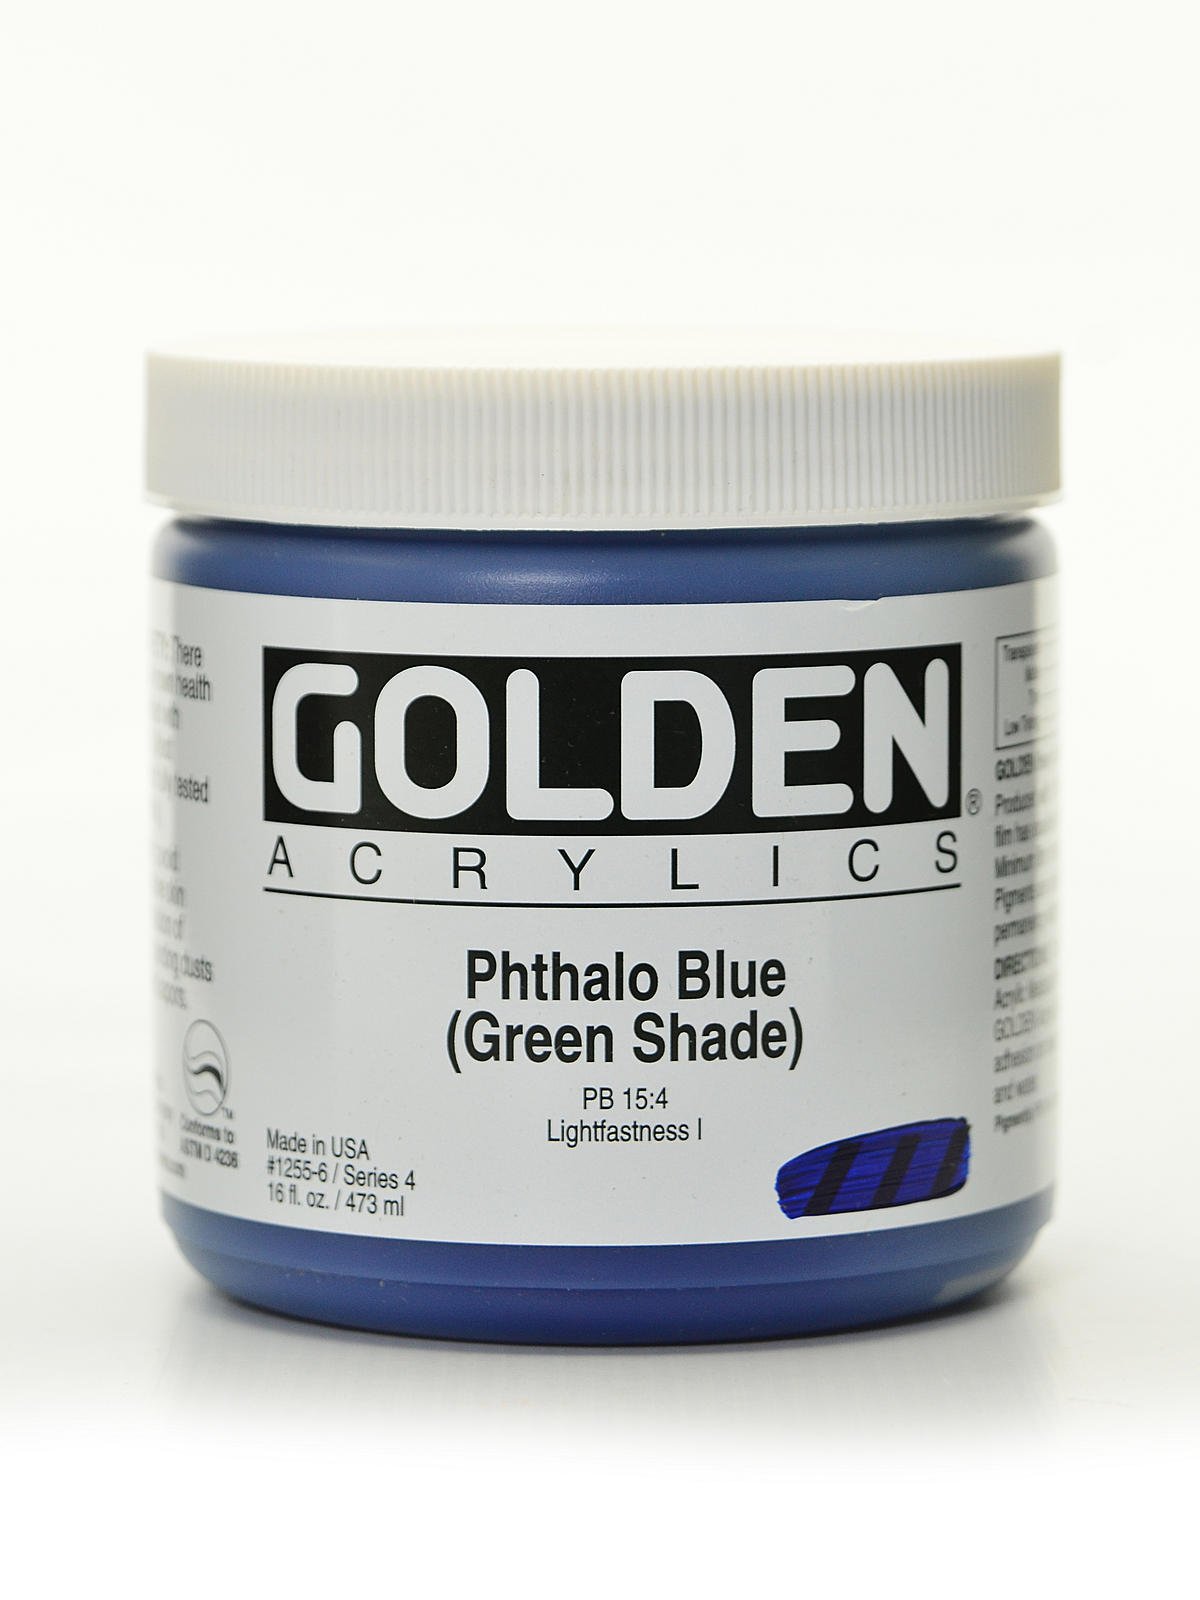 Phthalo Blue/Green Shade